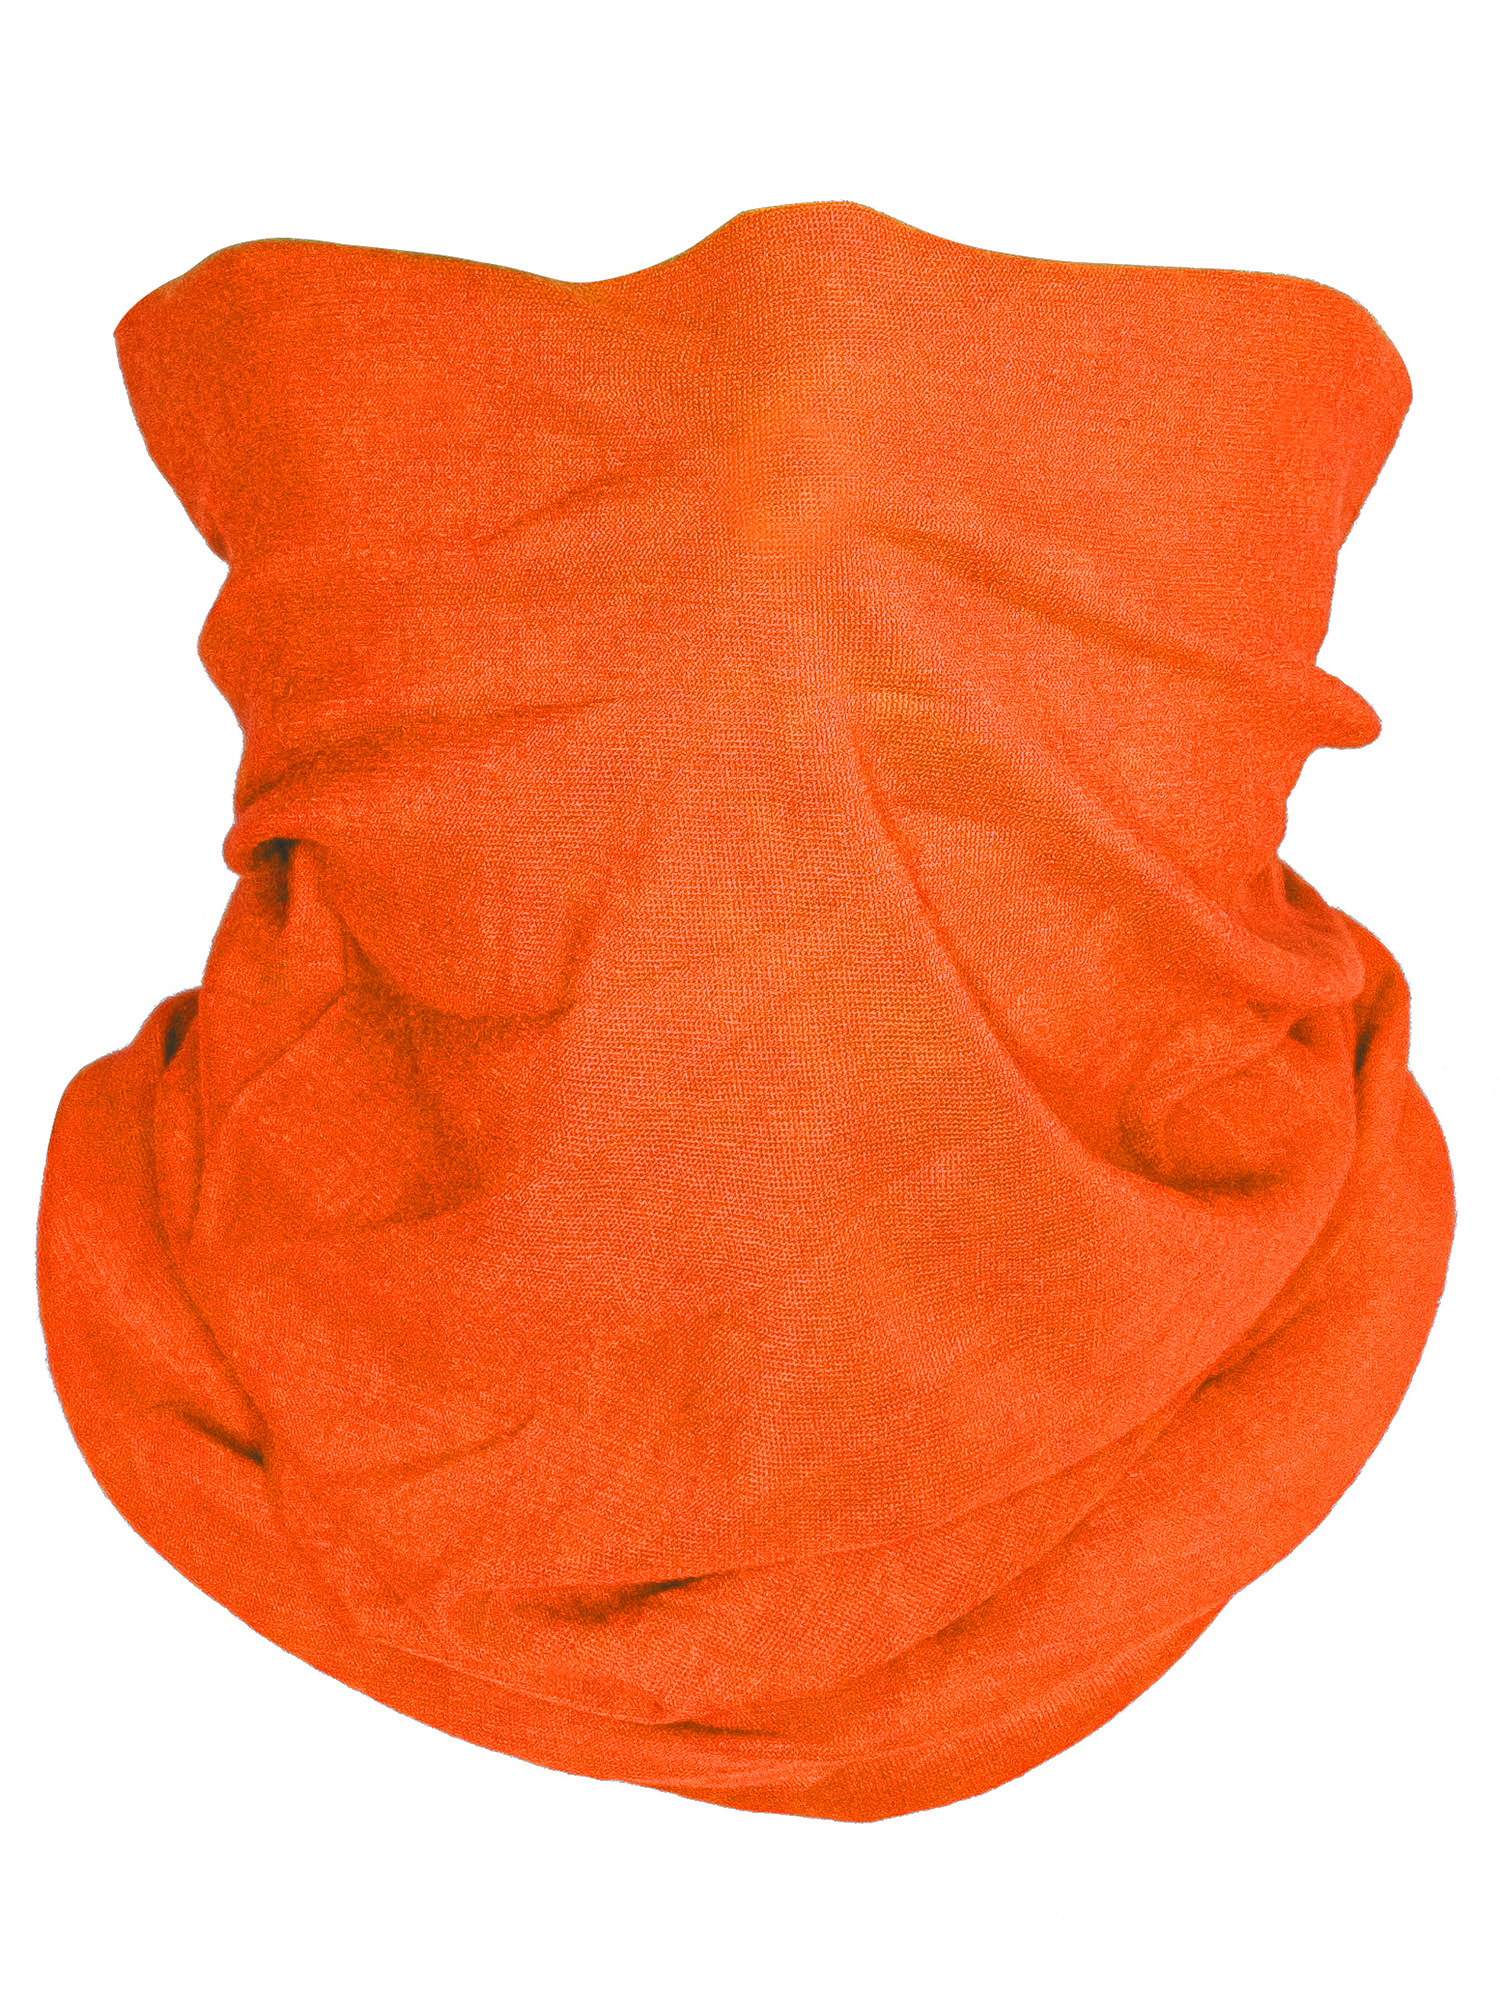 Top Headwear Multifunctional Face Covering Neck Gaiter Scarf - Neon Orange - image 1 of 2